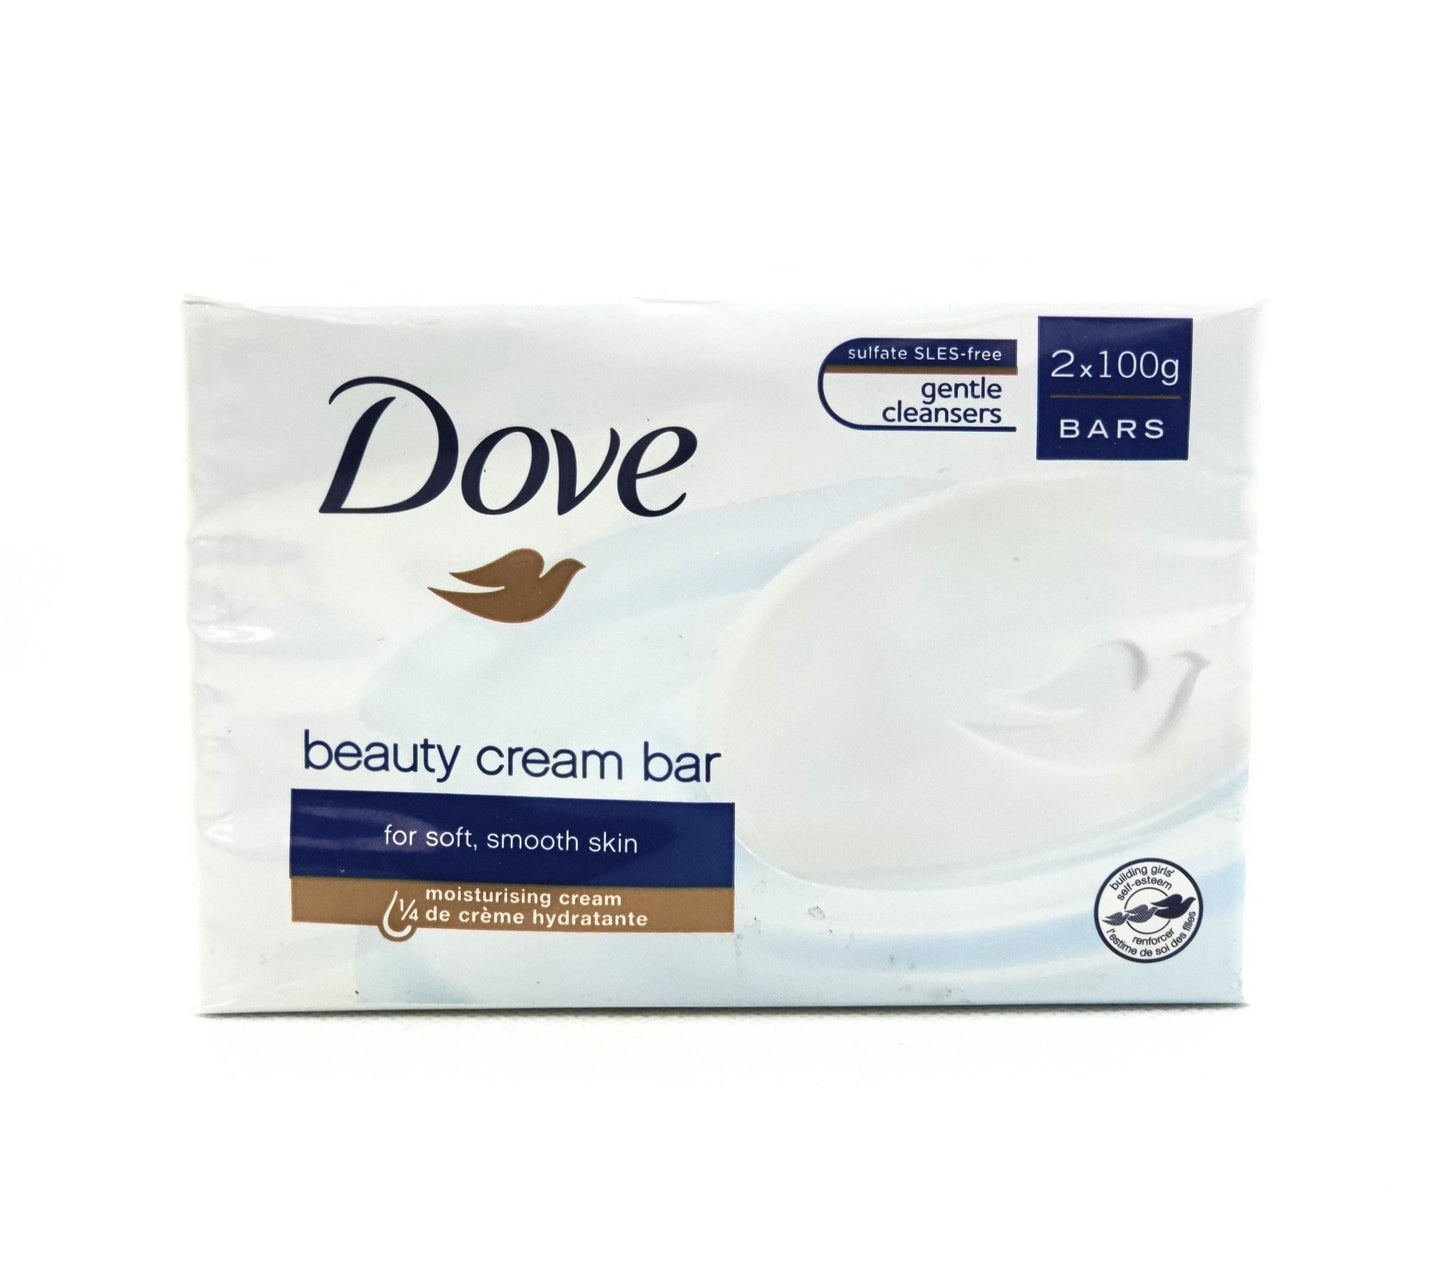 200 gram wrap of 2 in 1 dove beauty cream bar